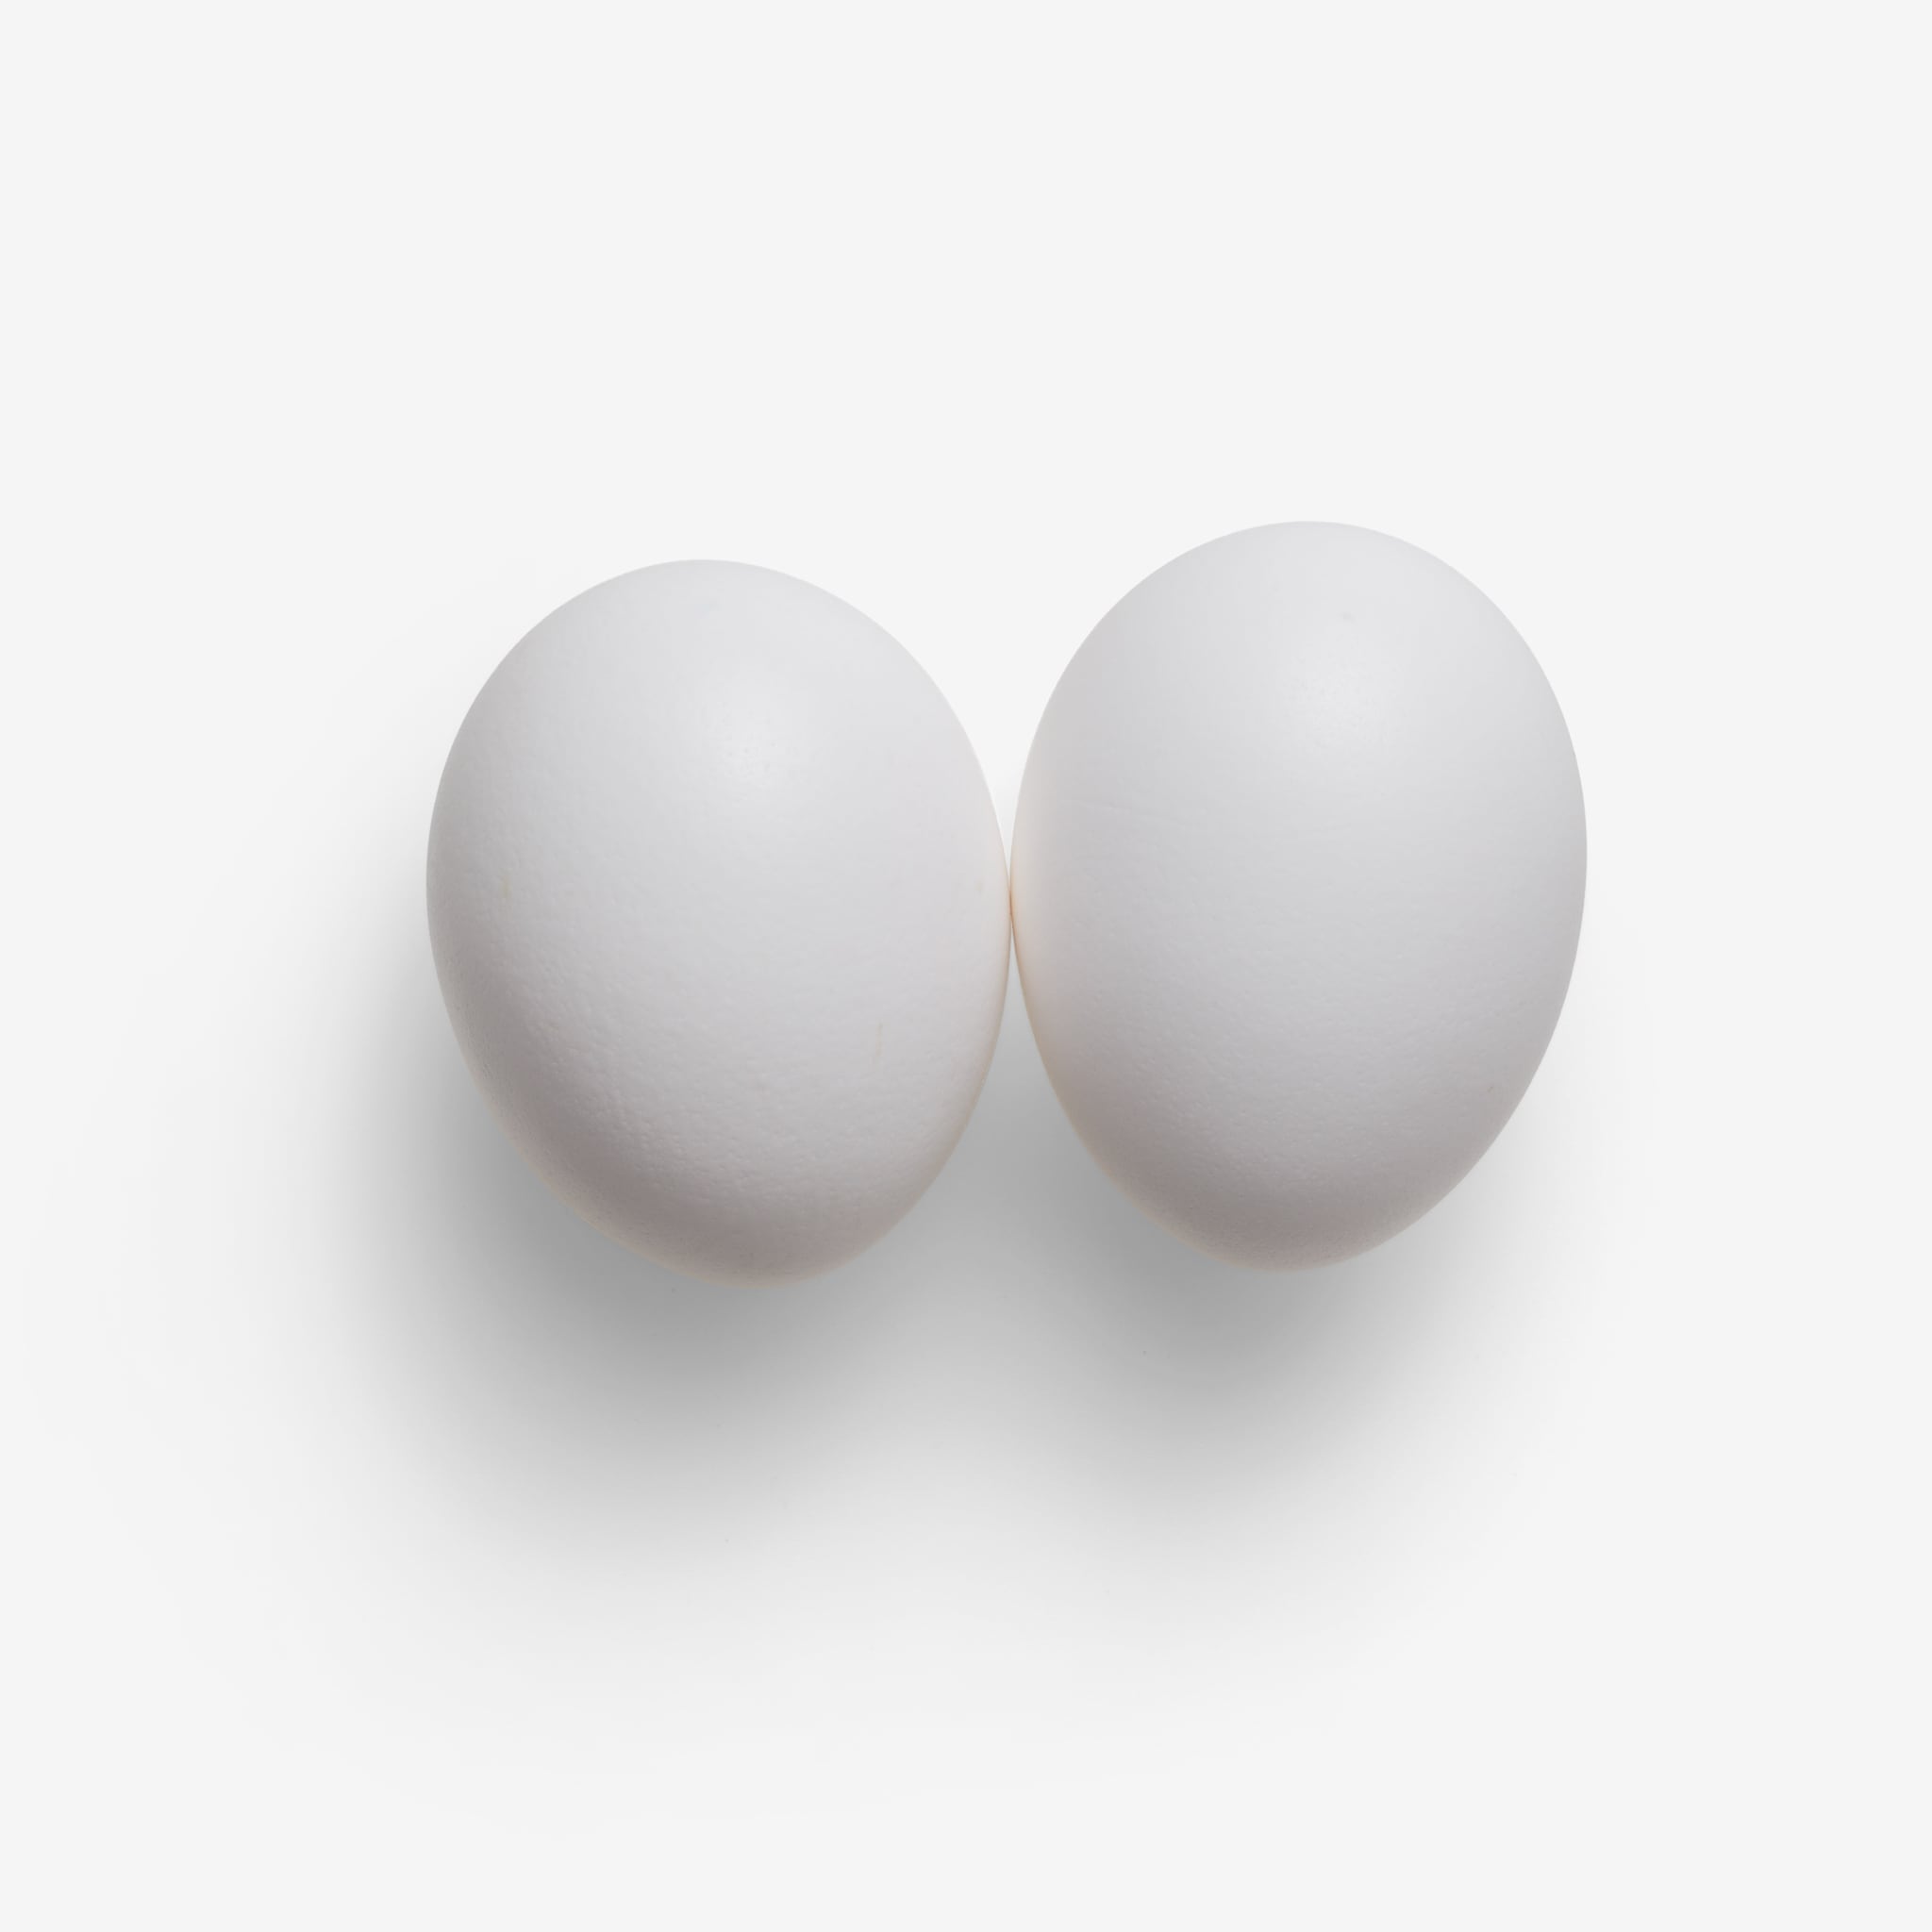 Egg image asset with transparent background